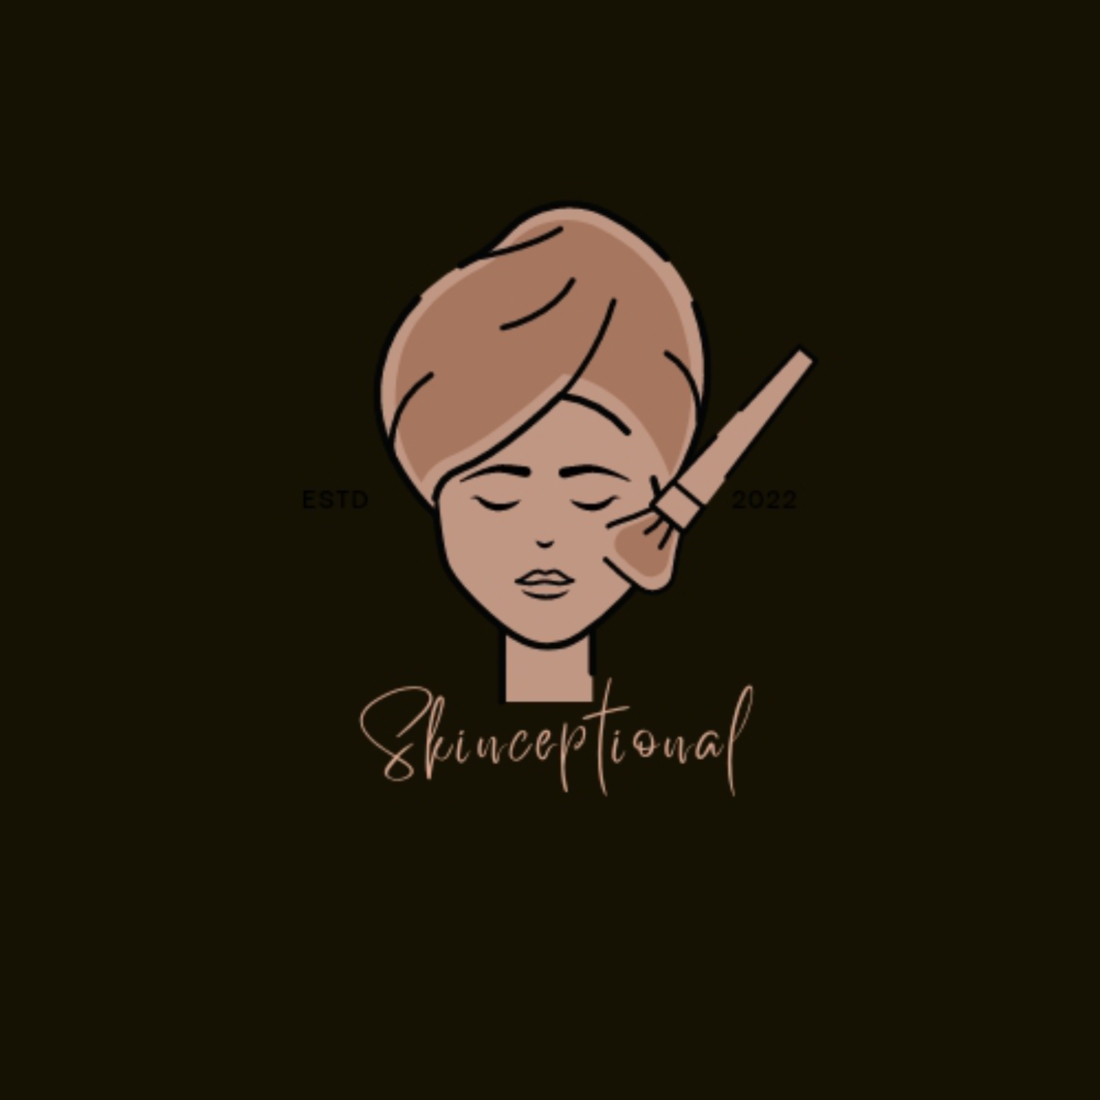 Skinceptional Logo Design cover image.